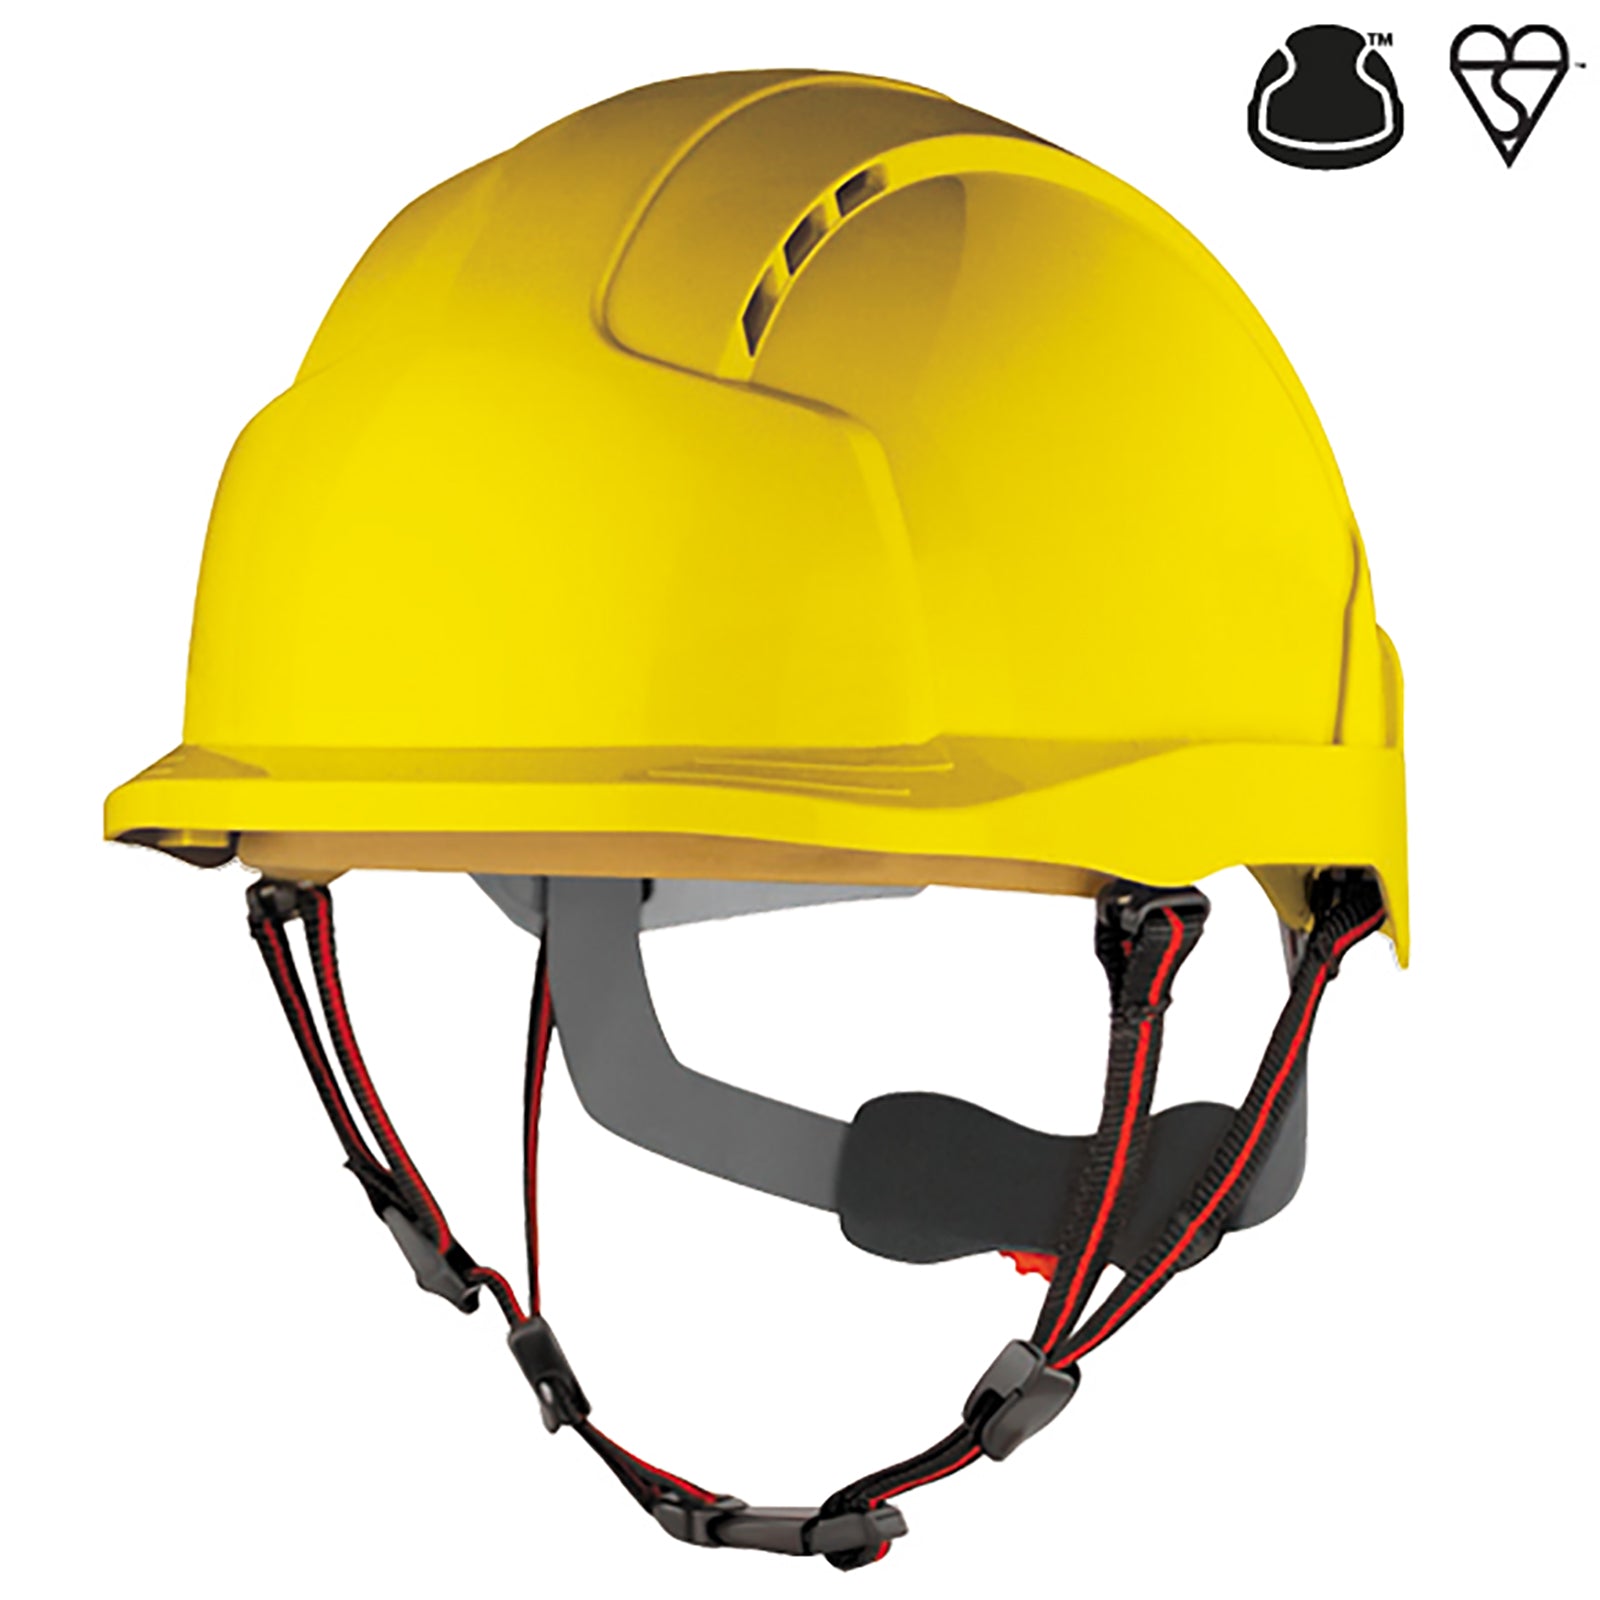 JSP EVOLite Skyworker Industrial Climbing Height Safety Helmet